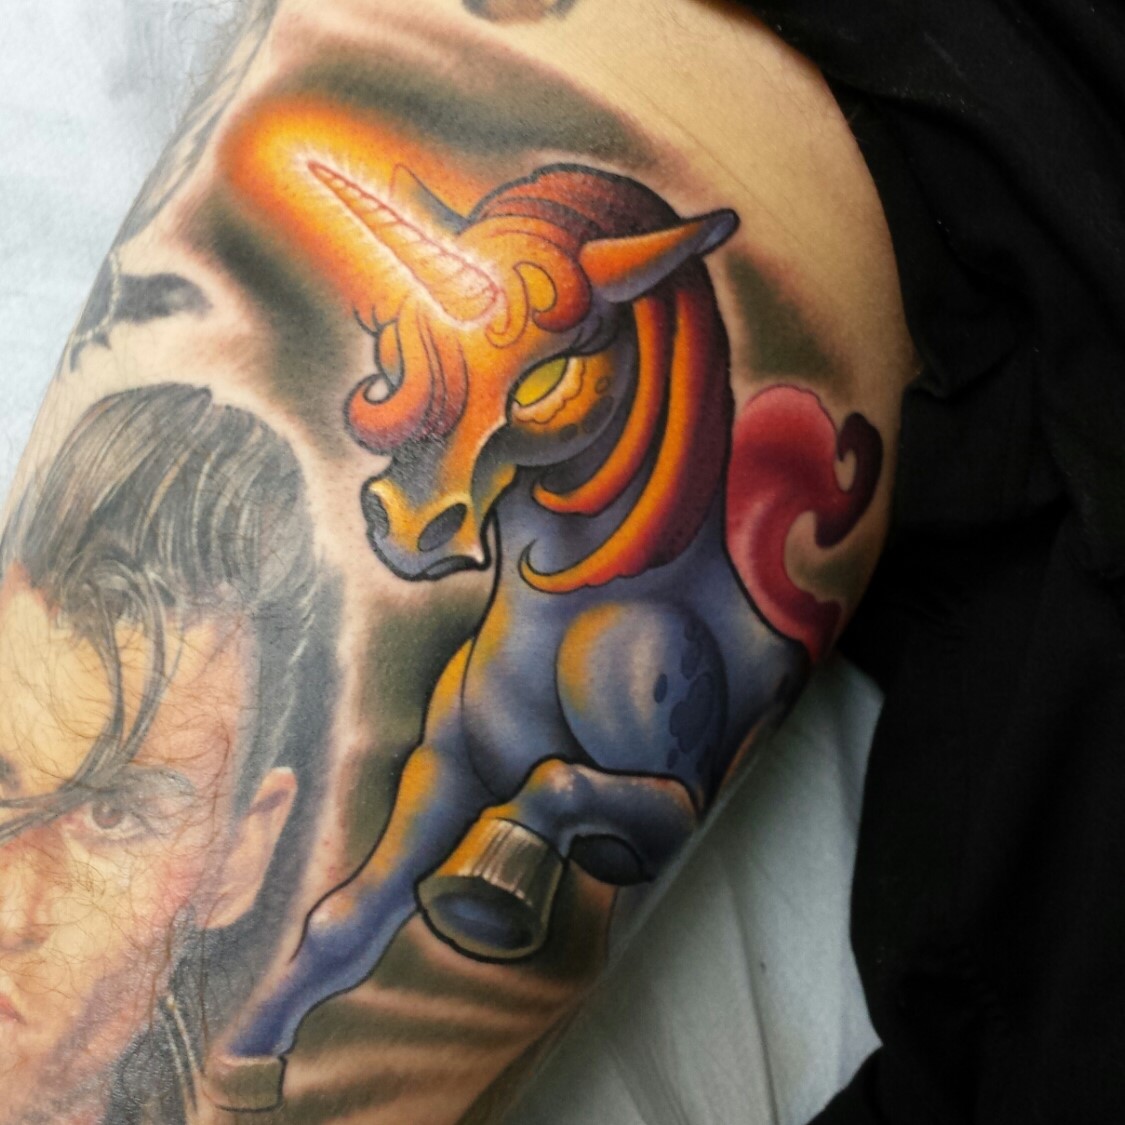 Unicorn Tattoo created by Cracker Joe Swider in Connecticut